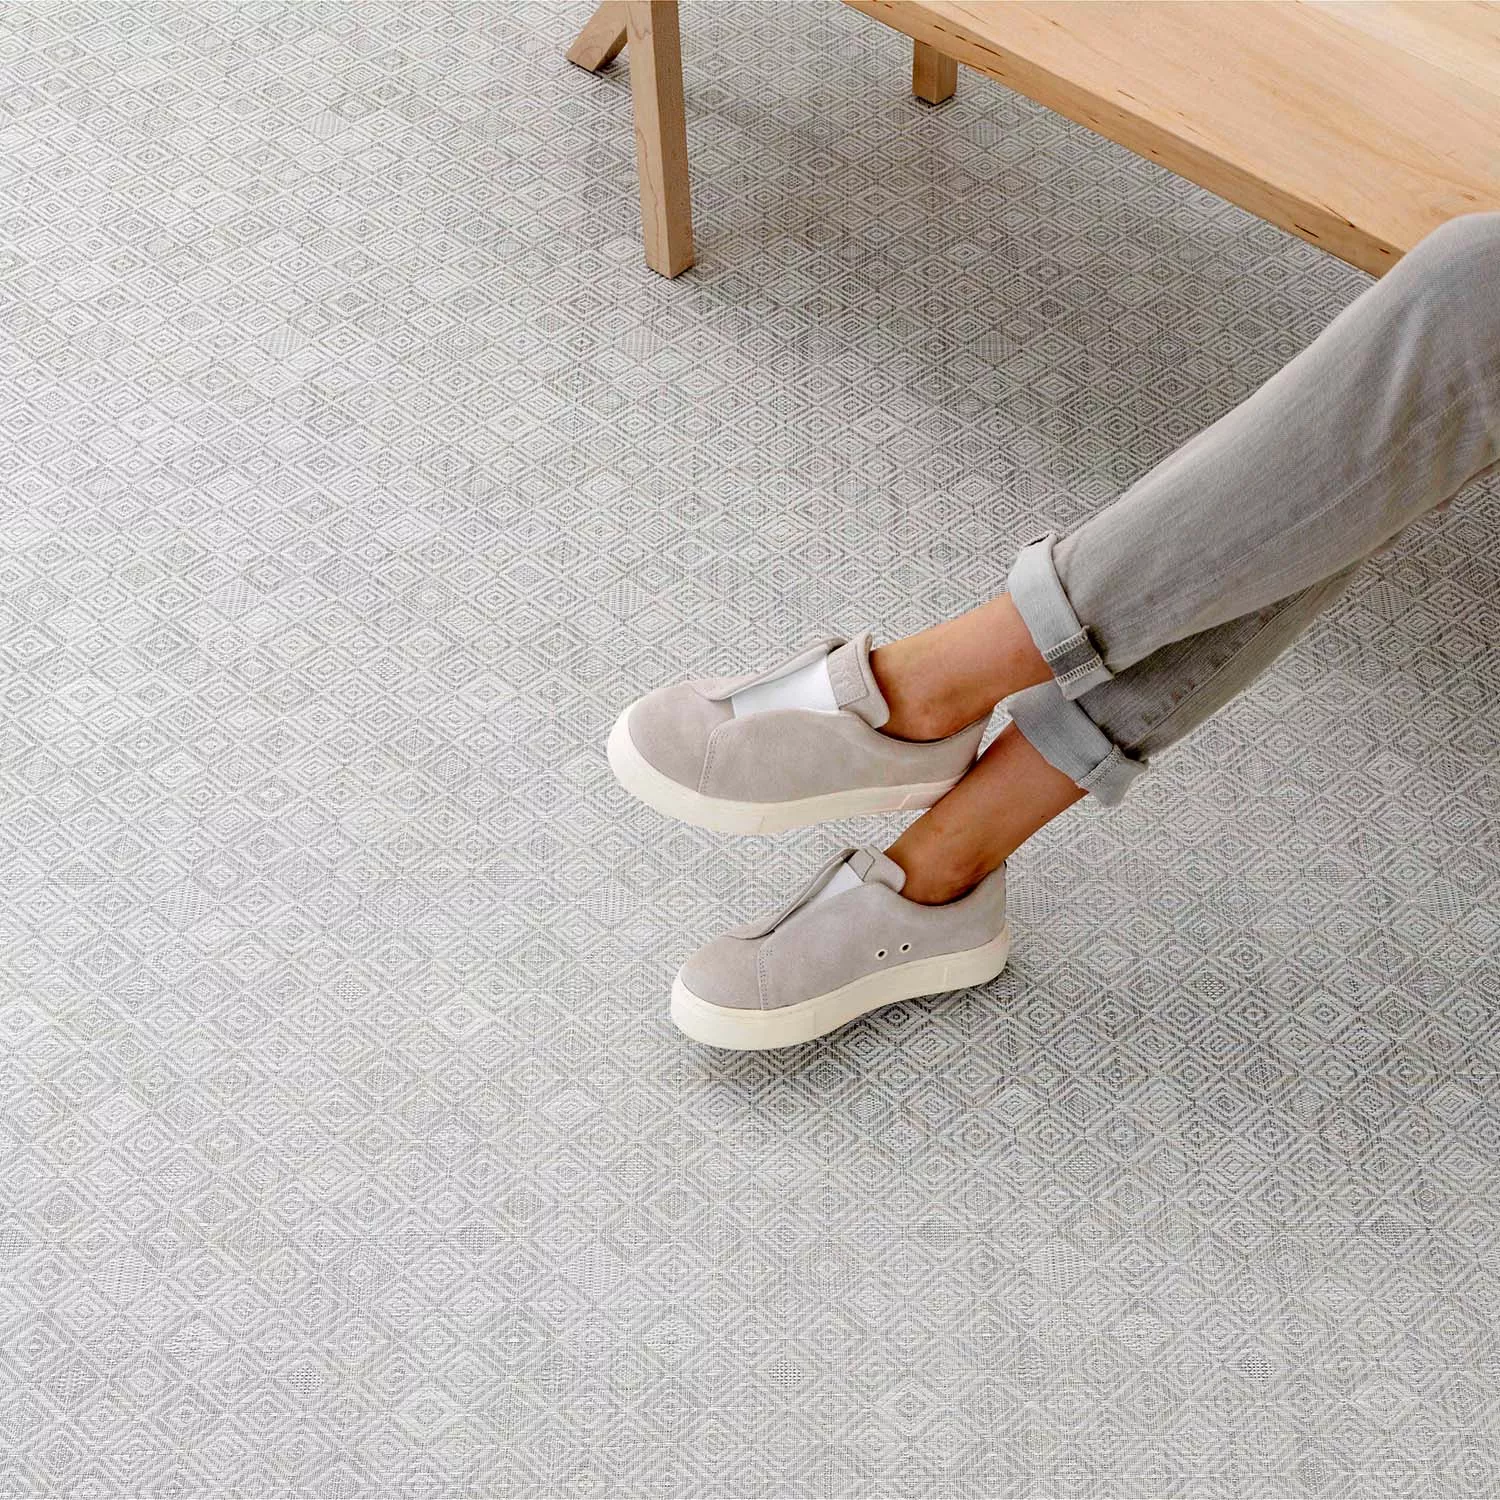 Chilewich Mosaic Floor Mat, Grey